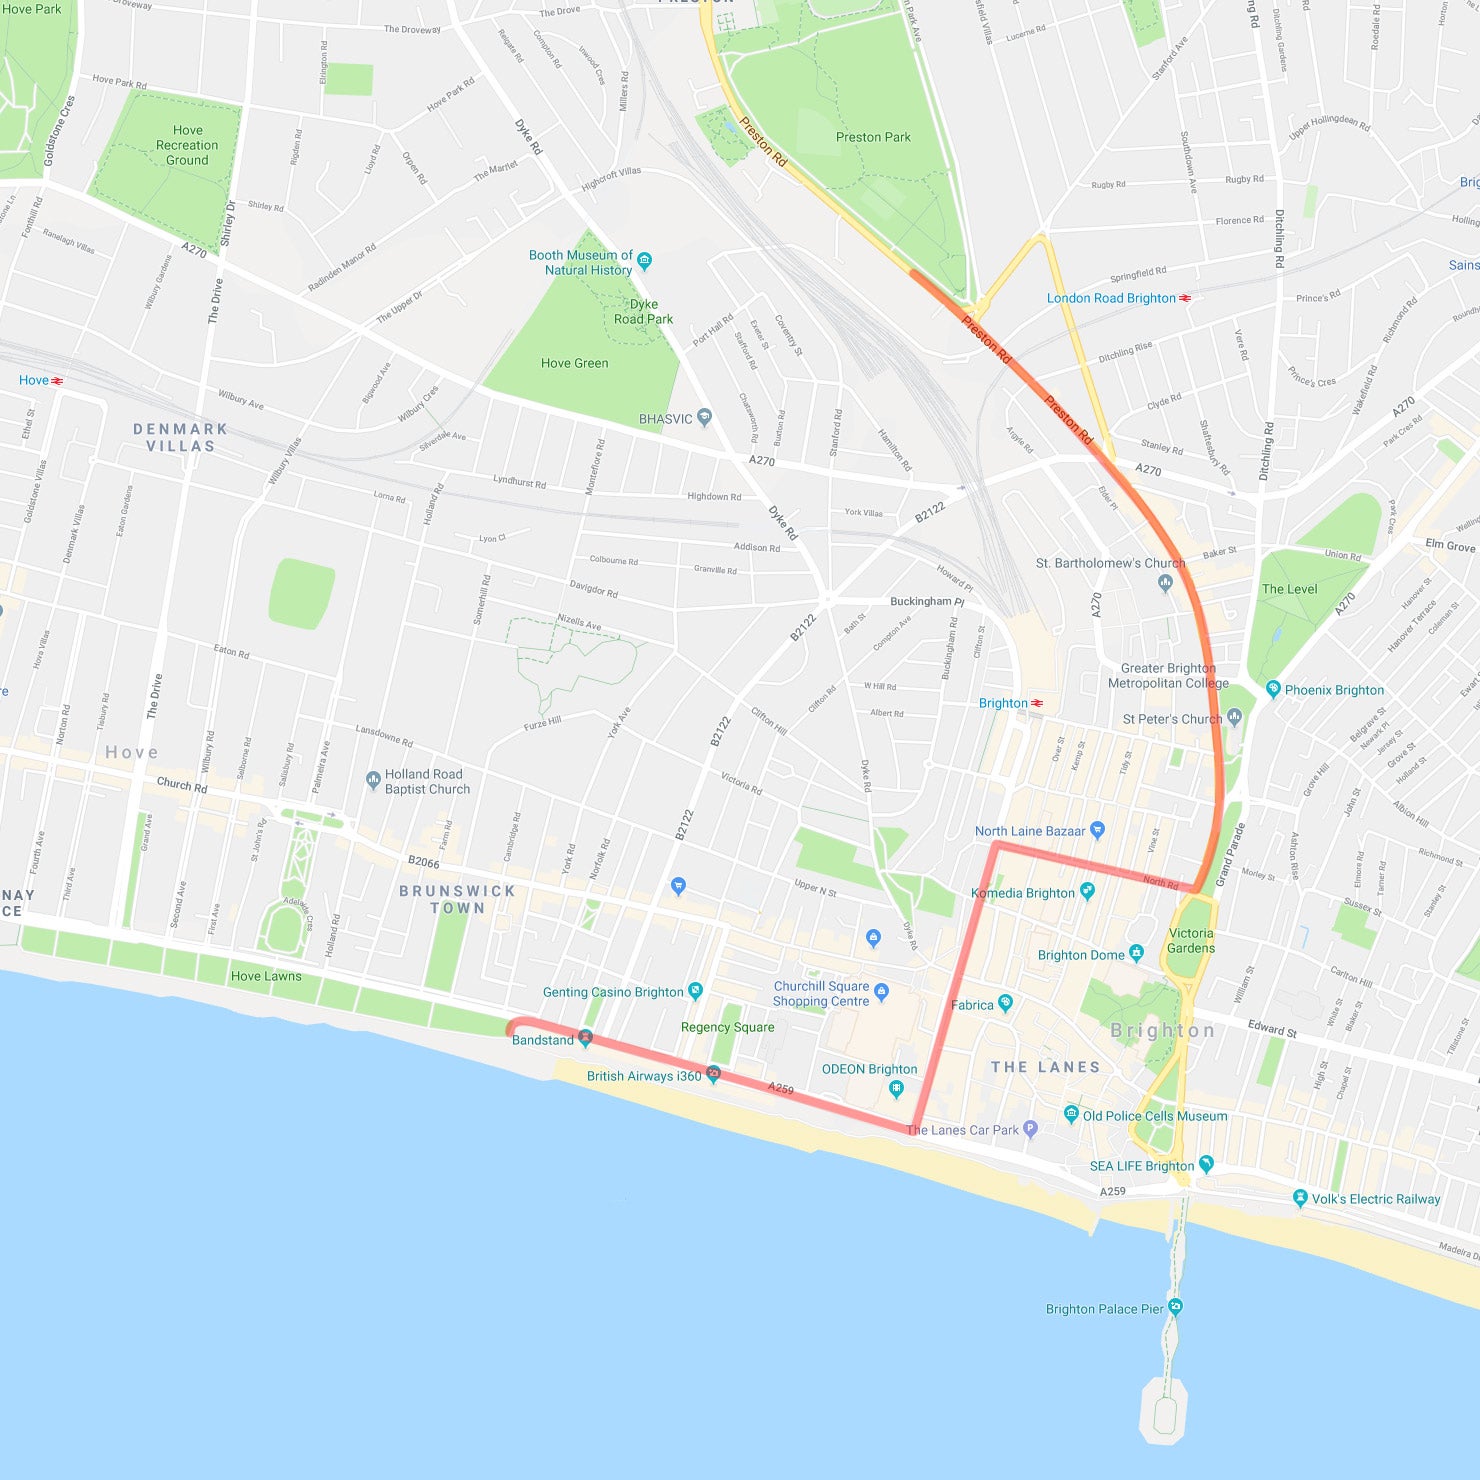 The new route for the Brighton Pride parade 2019